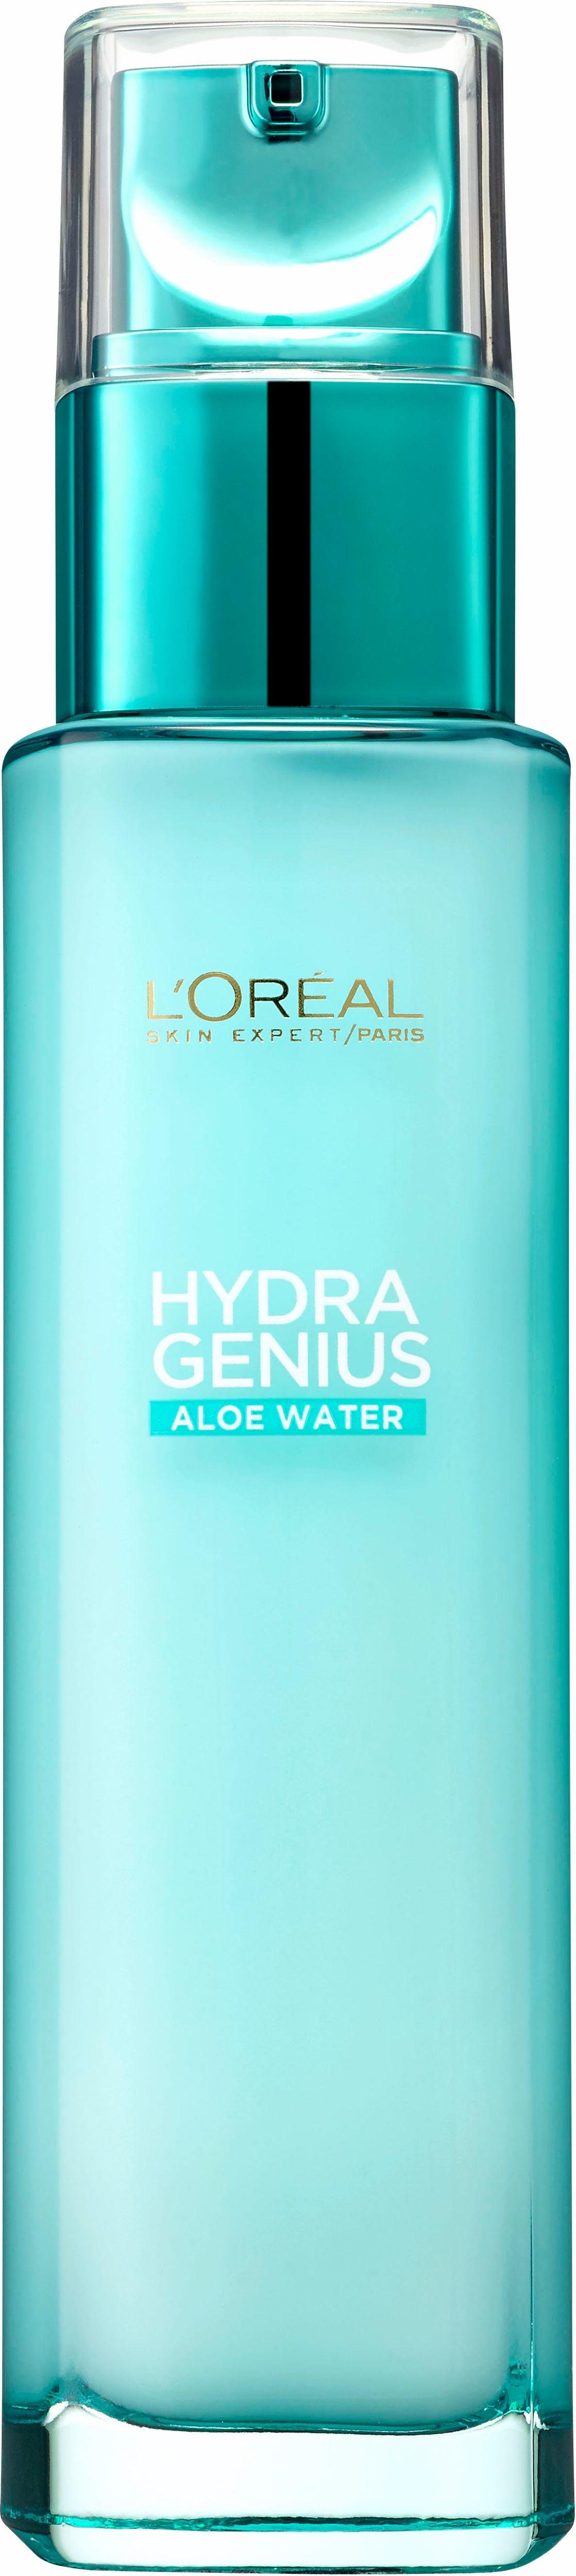 Genius trockene PARIS bis für L'ORÉAL Haut Aloe Hydra normale Gesichtsfluid Aqua,